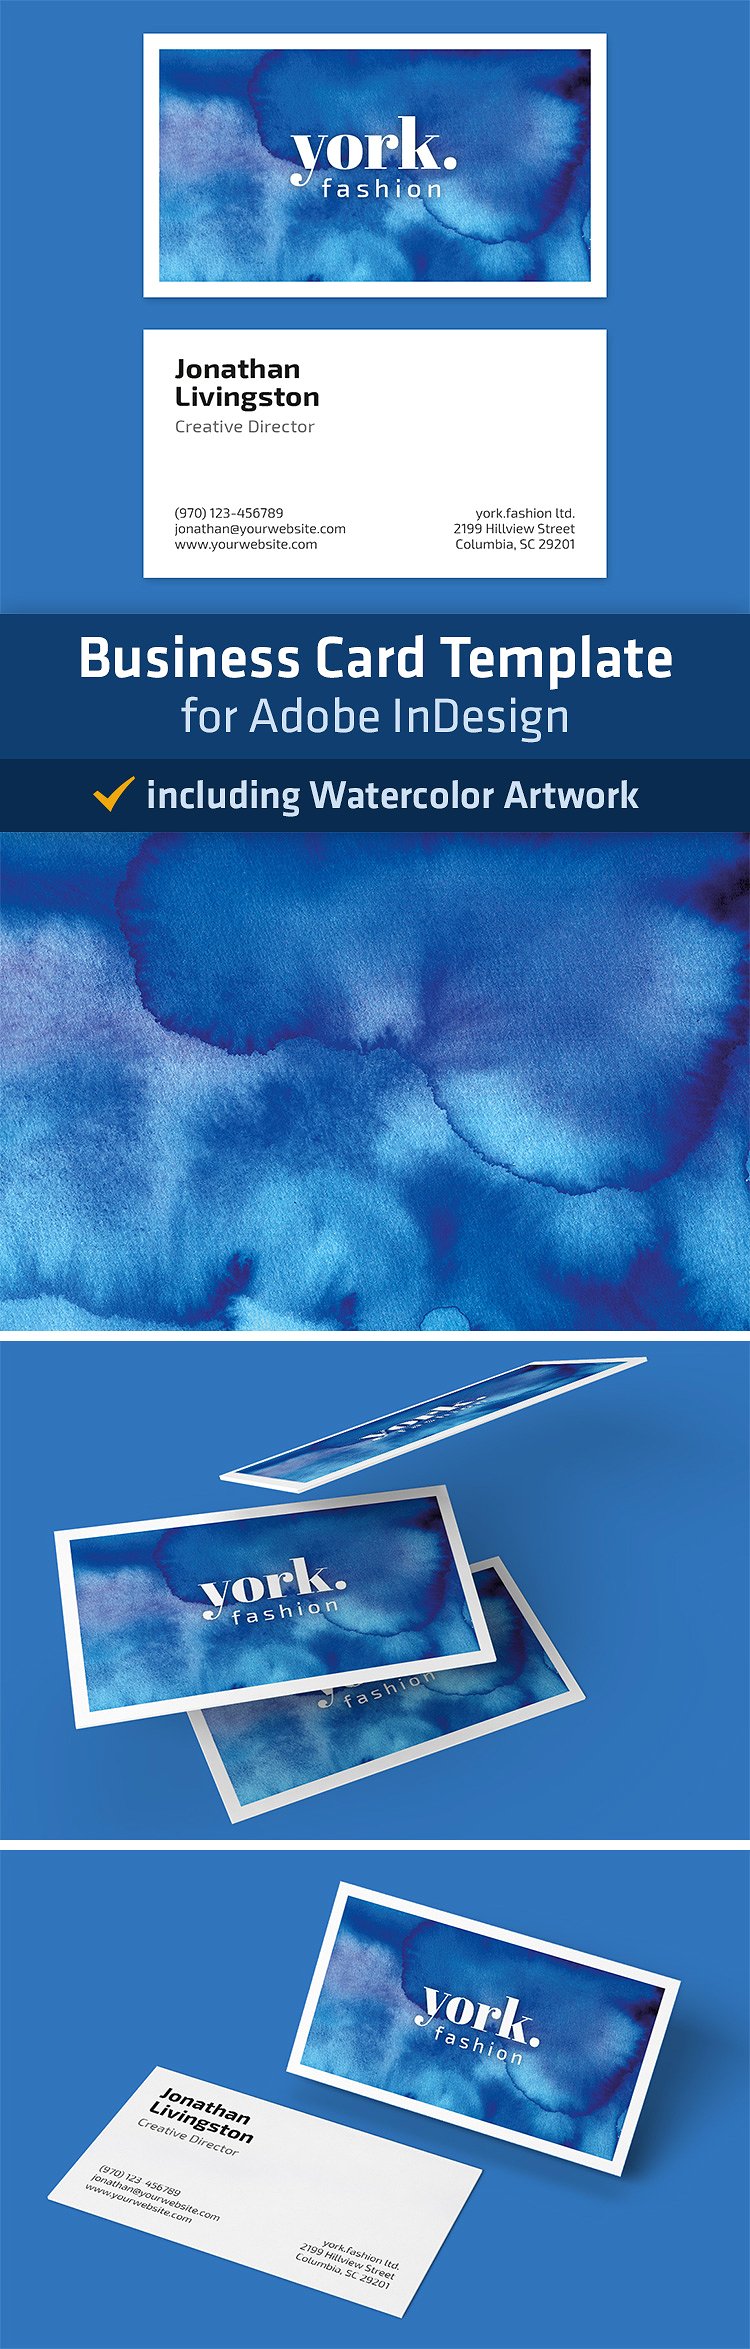 蓝色水彩画背景名片模板Watercolor Business